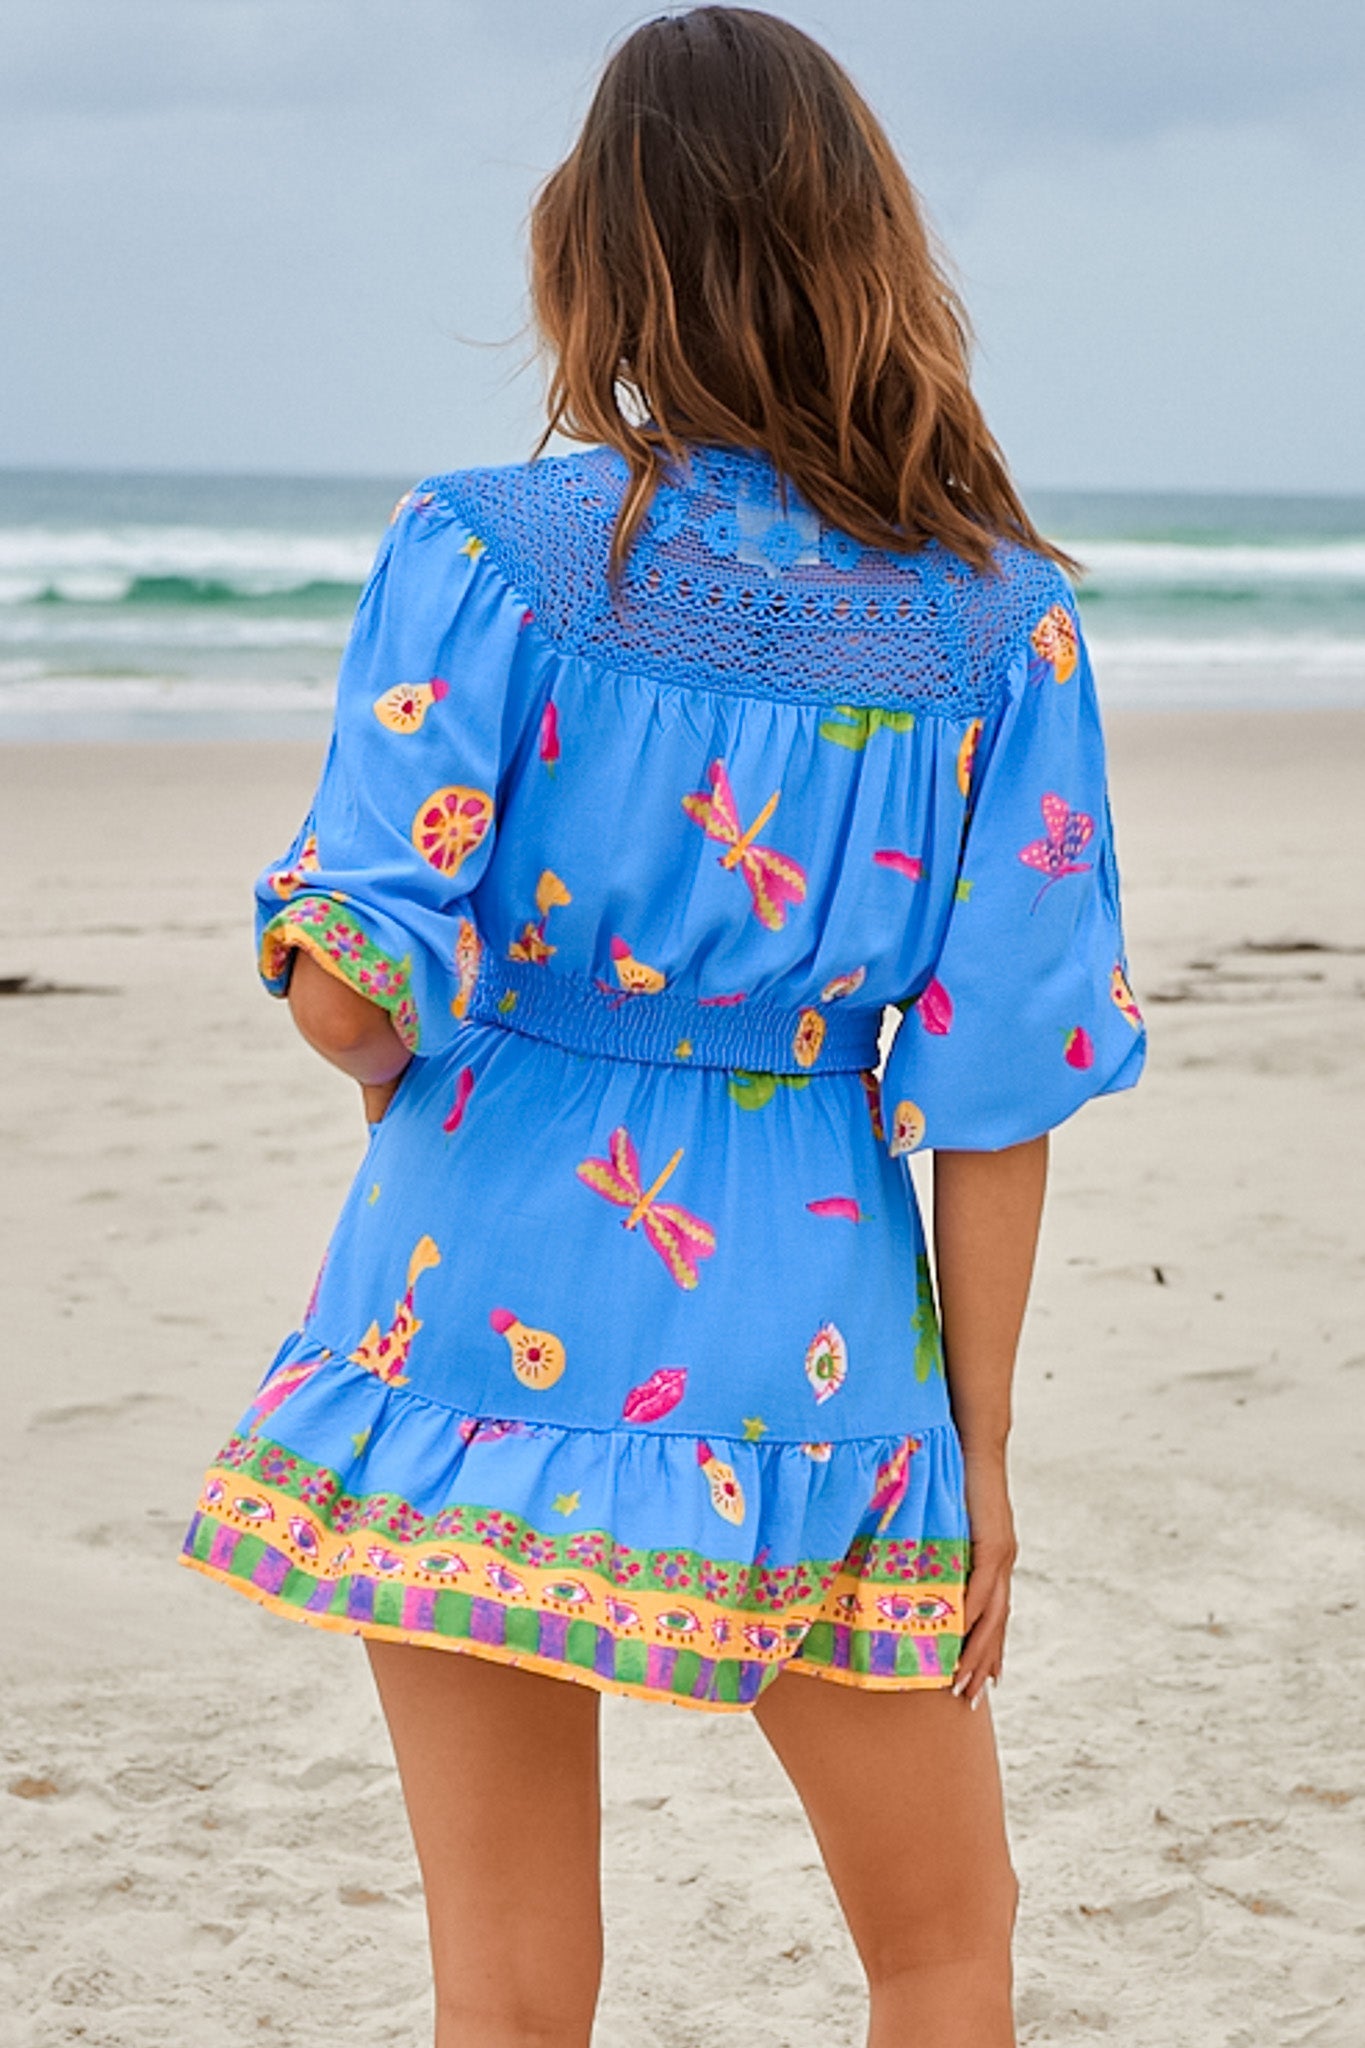 JAASE - Olivia Mini Dress: Lace Shoulder Detailed A Line Dress in Mati Print